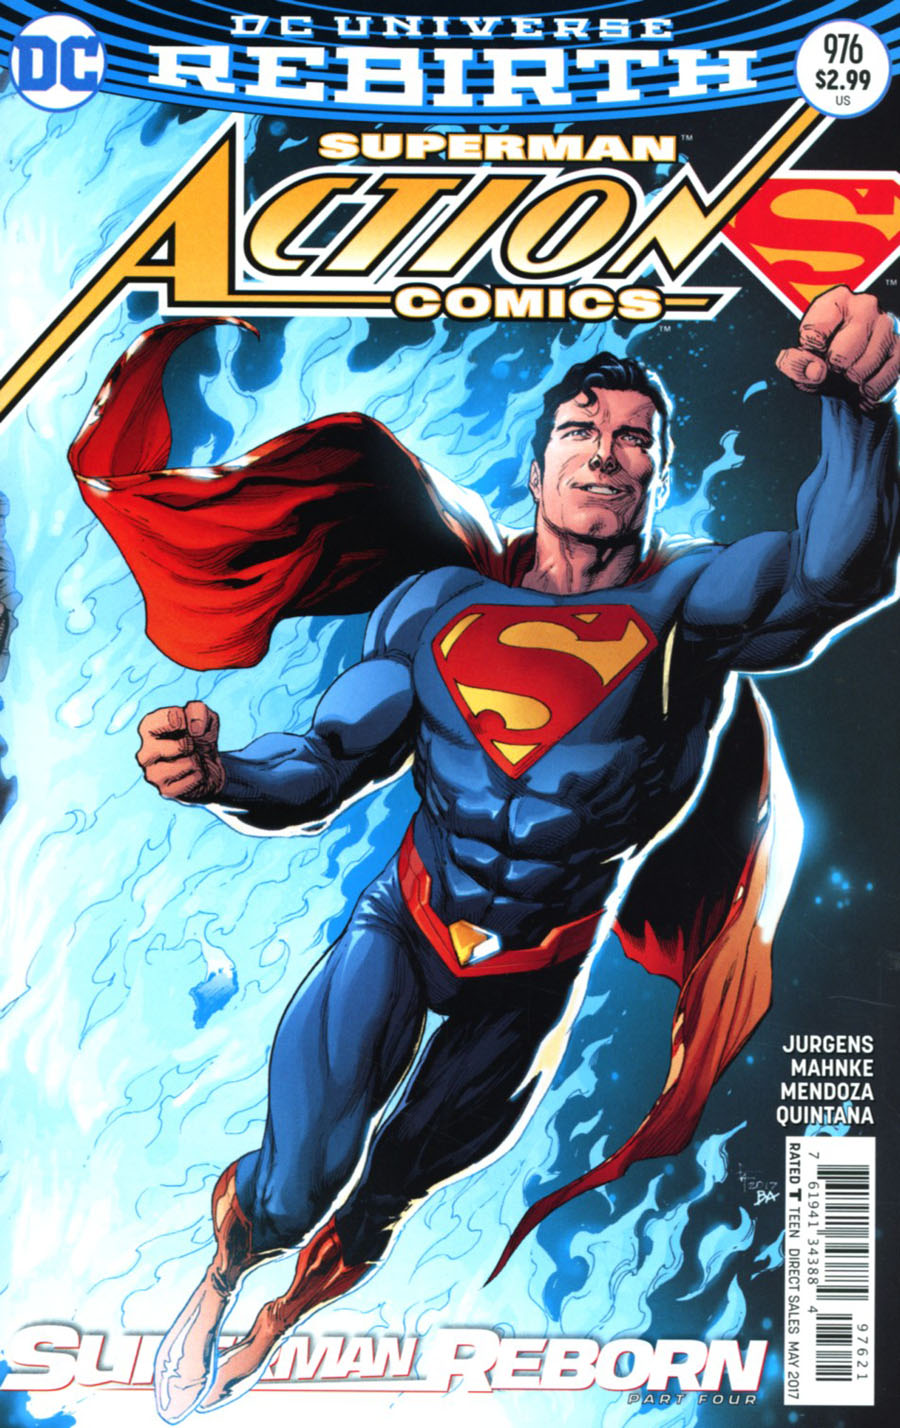 Action Comics Vol 2 #976 Cover B Variant Gary Frank Cover (Superman Reborn Part 4)